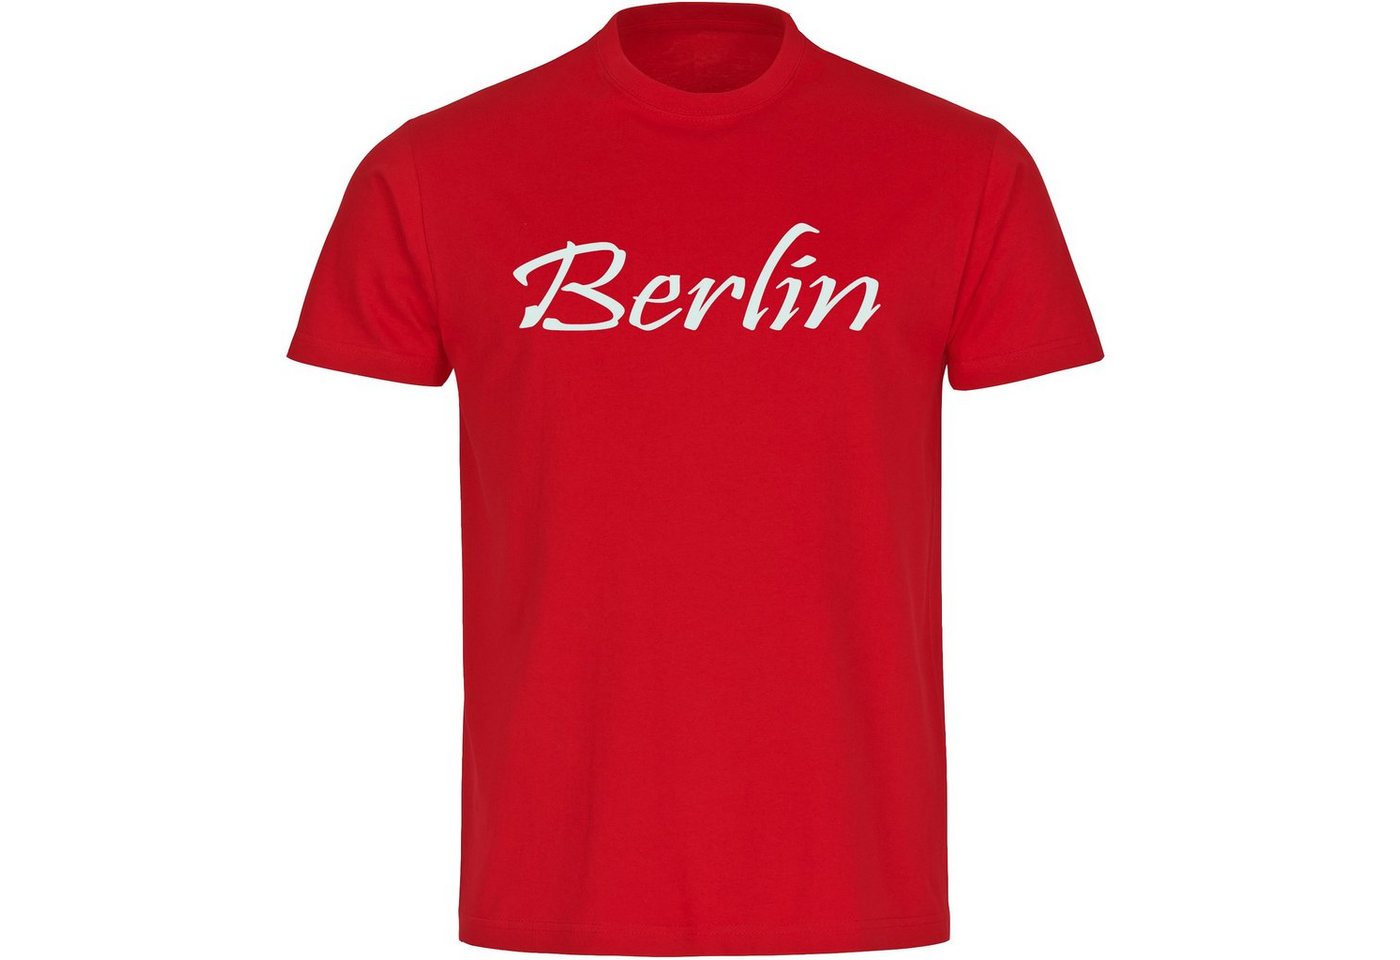 multifanshop T-Shirt Herren Berlin rot - Schriftzug - Männer von multifanshop